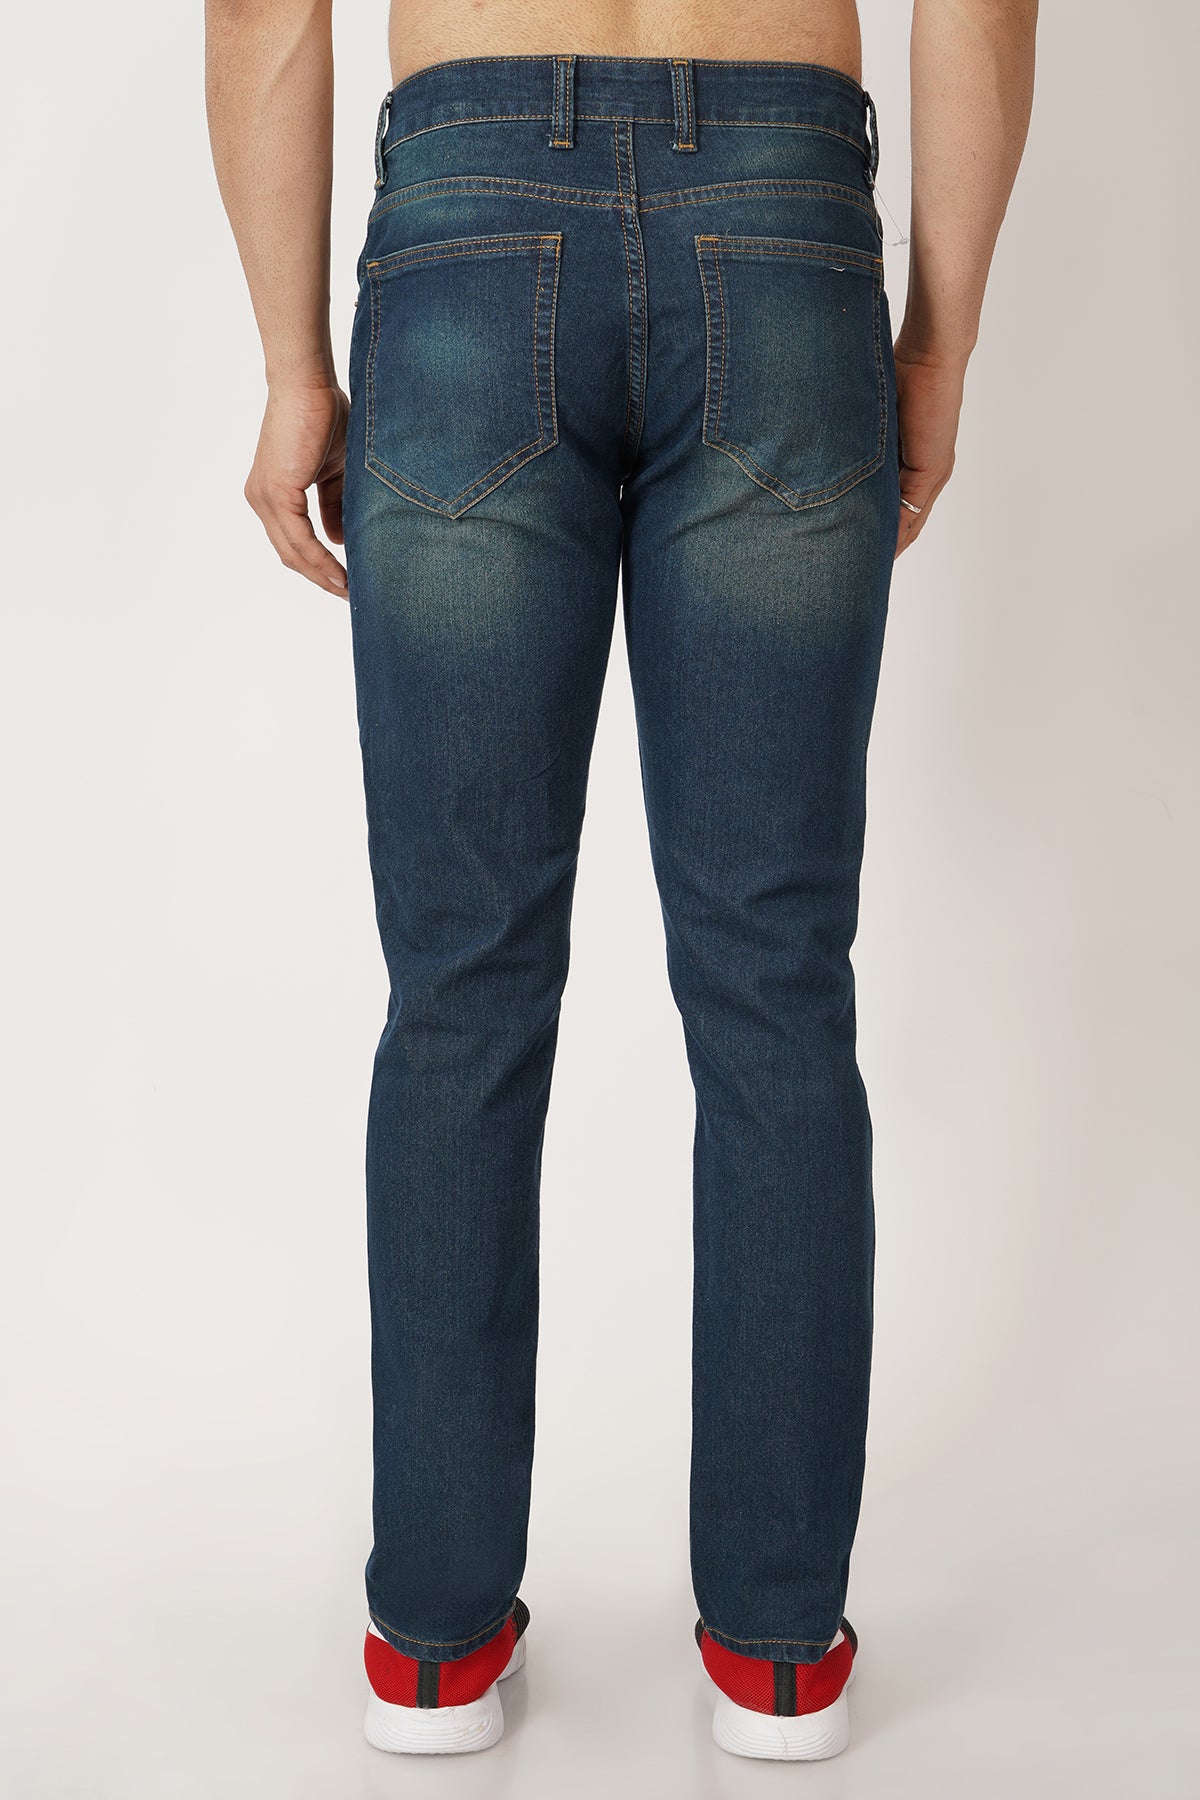 Men's Dusty Blue Slim Fit Jeans